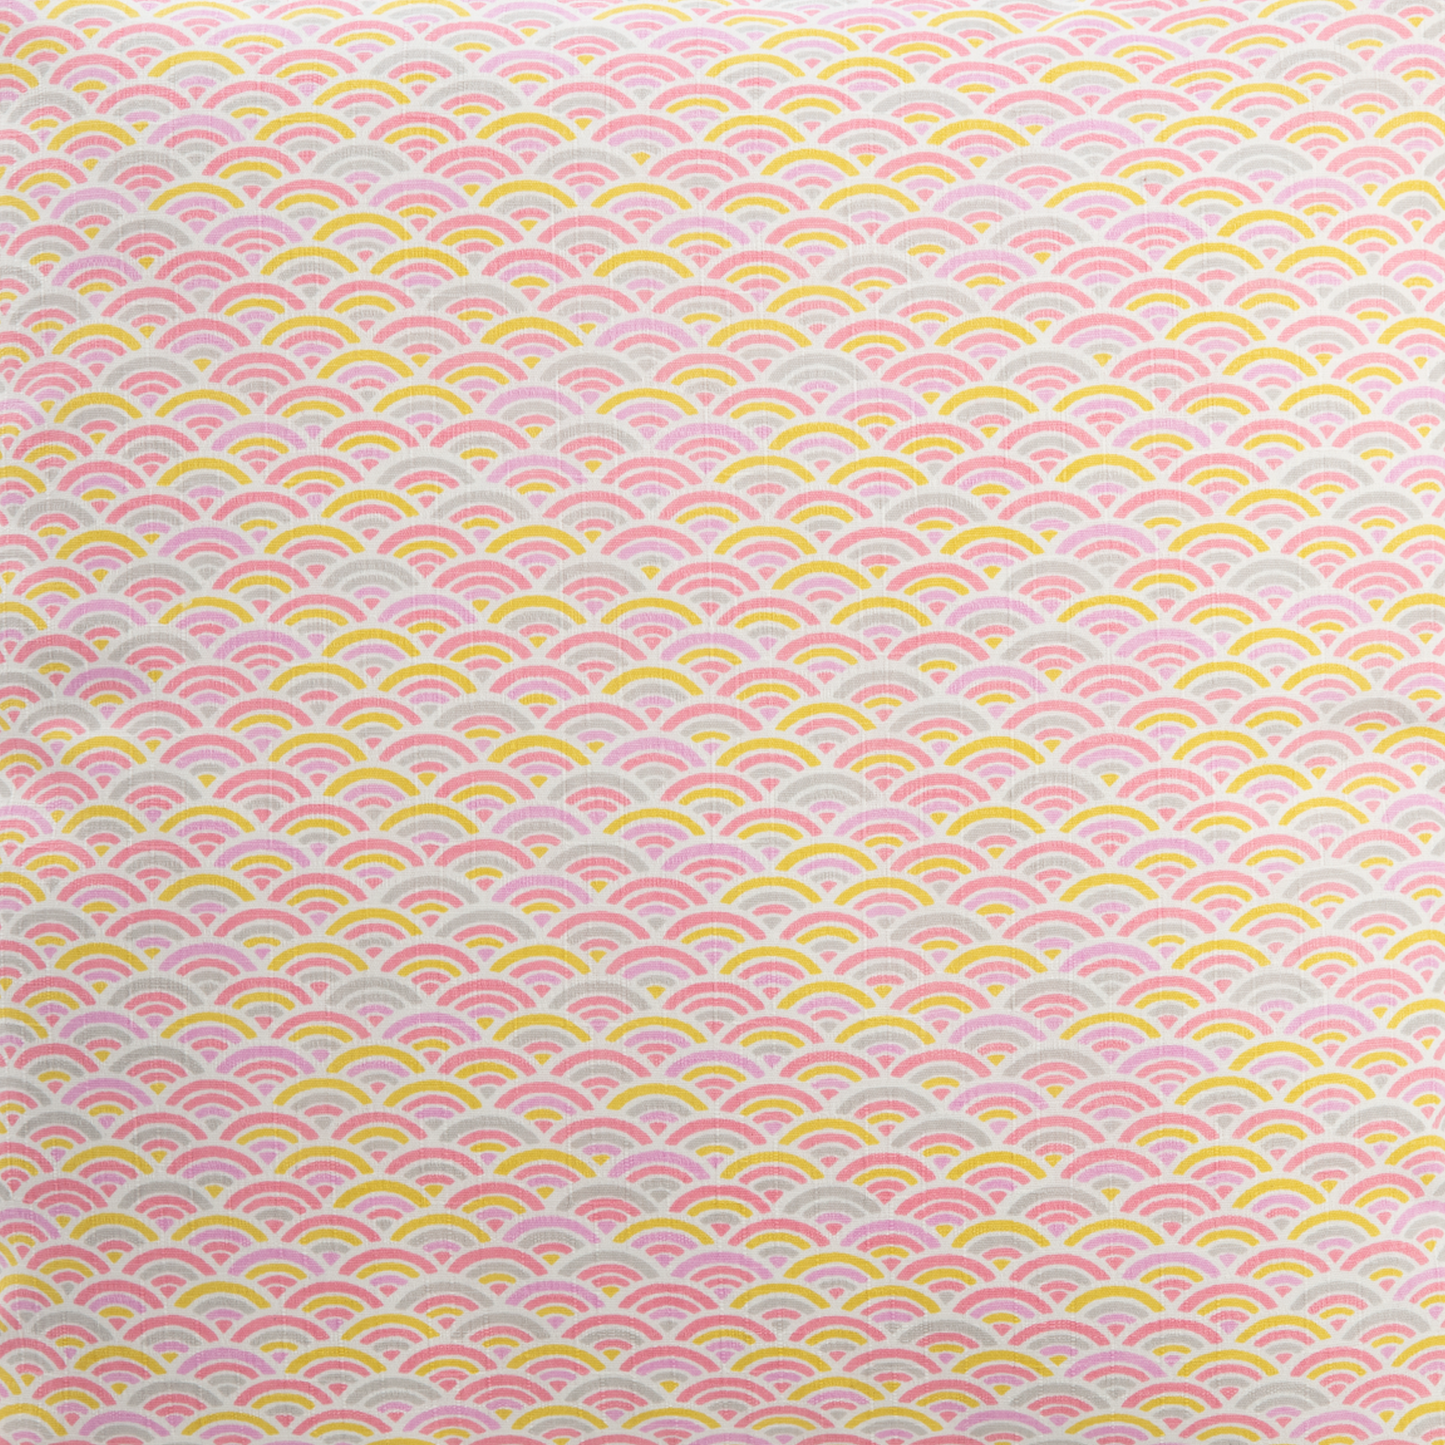 Imported Japanese Fabric - Colorful Seika Ha Pink_Fabric_Imported from Japan_100% Cotton_Japanese Sleep System